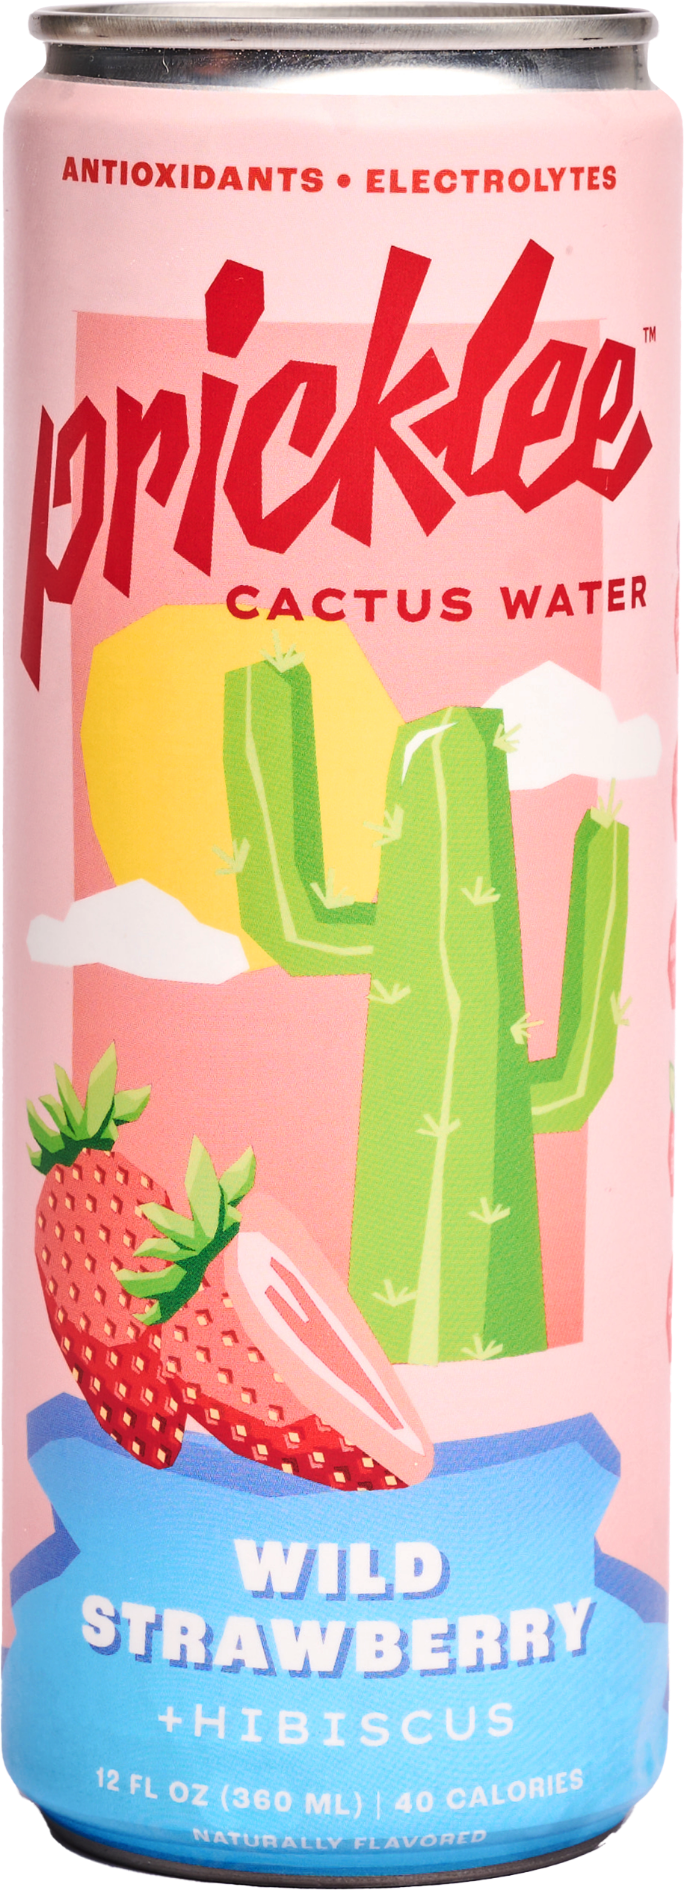 Pricklee Cactus Water - Wild Strawberry + Hibiscus - 12 Pack